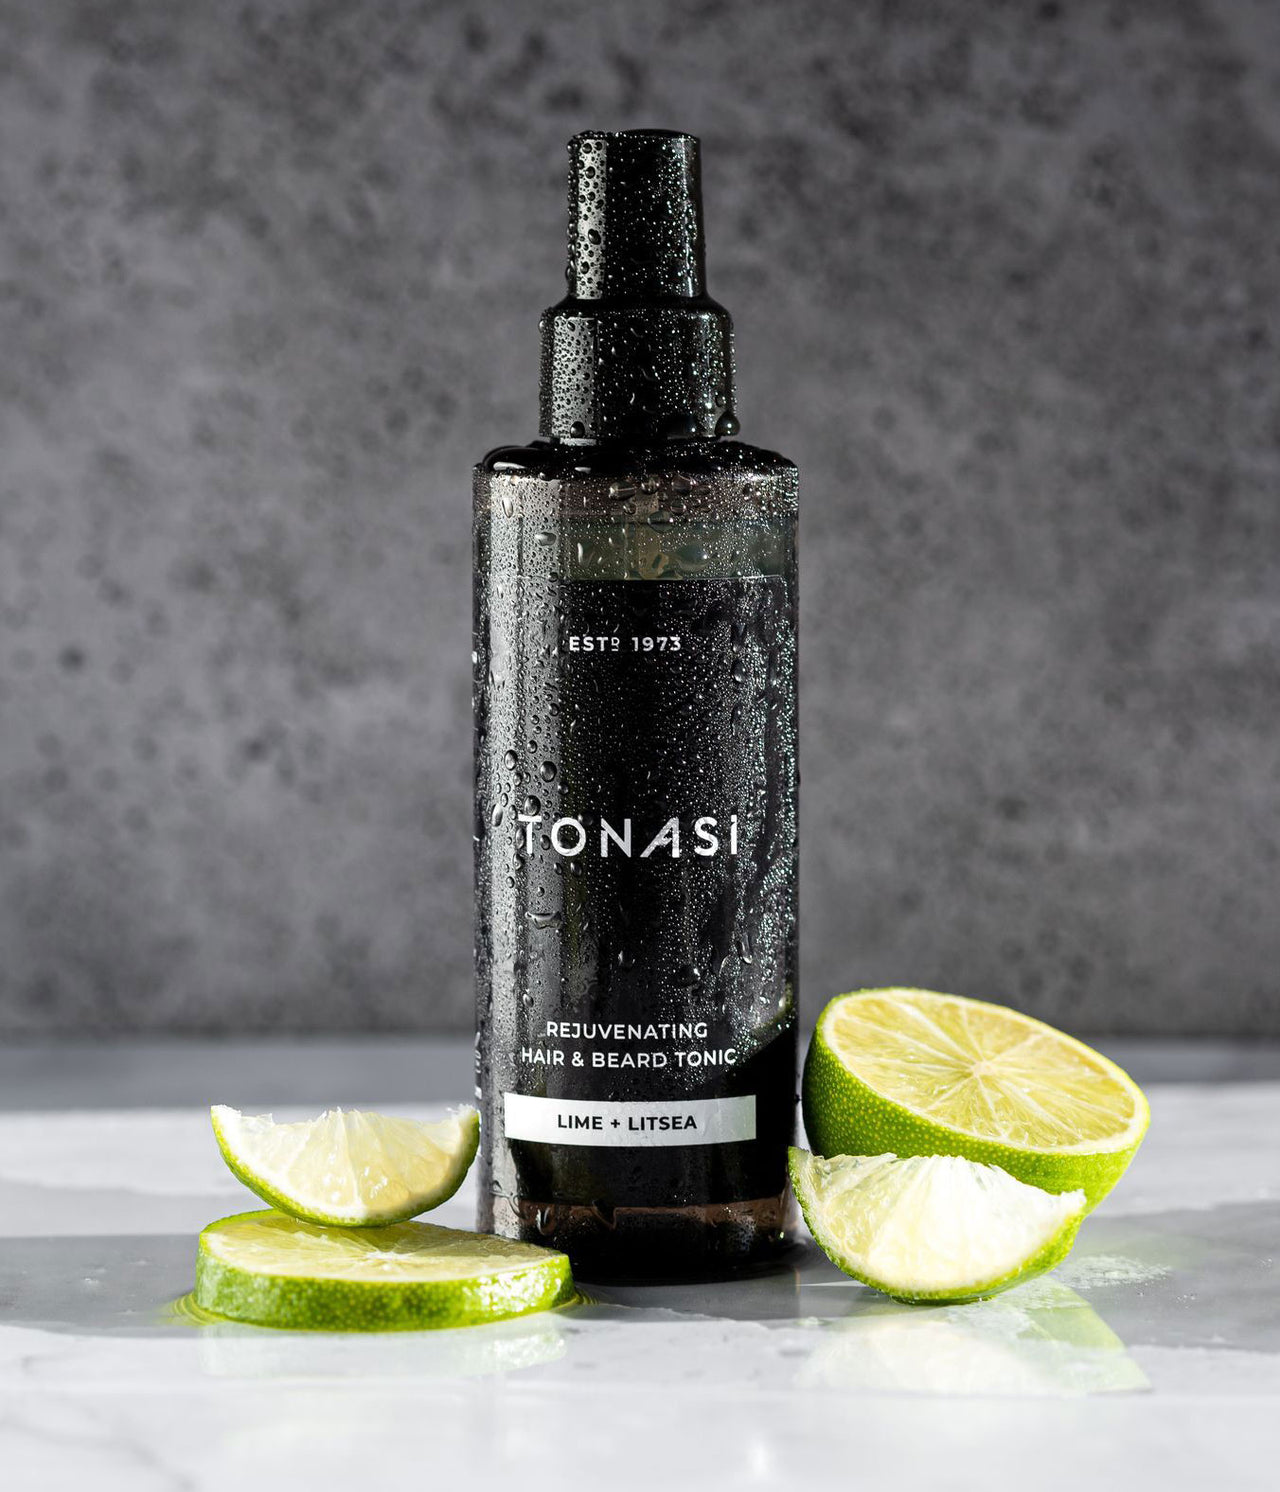 Lime + Litsea Rejuvenating Hair & Beard Tonic